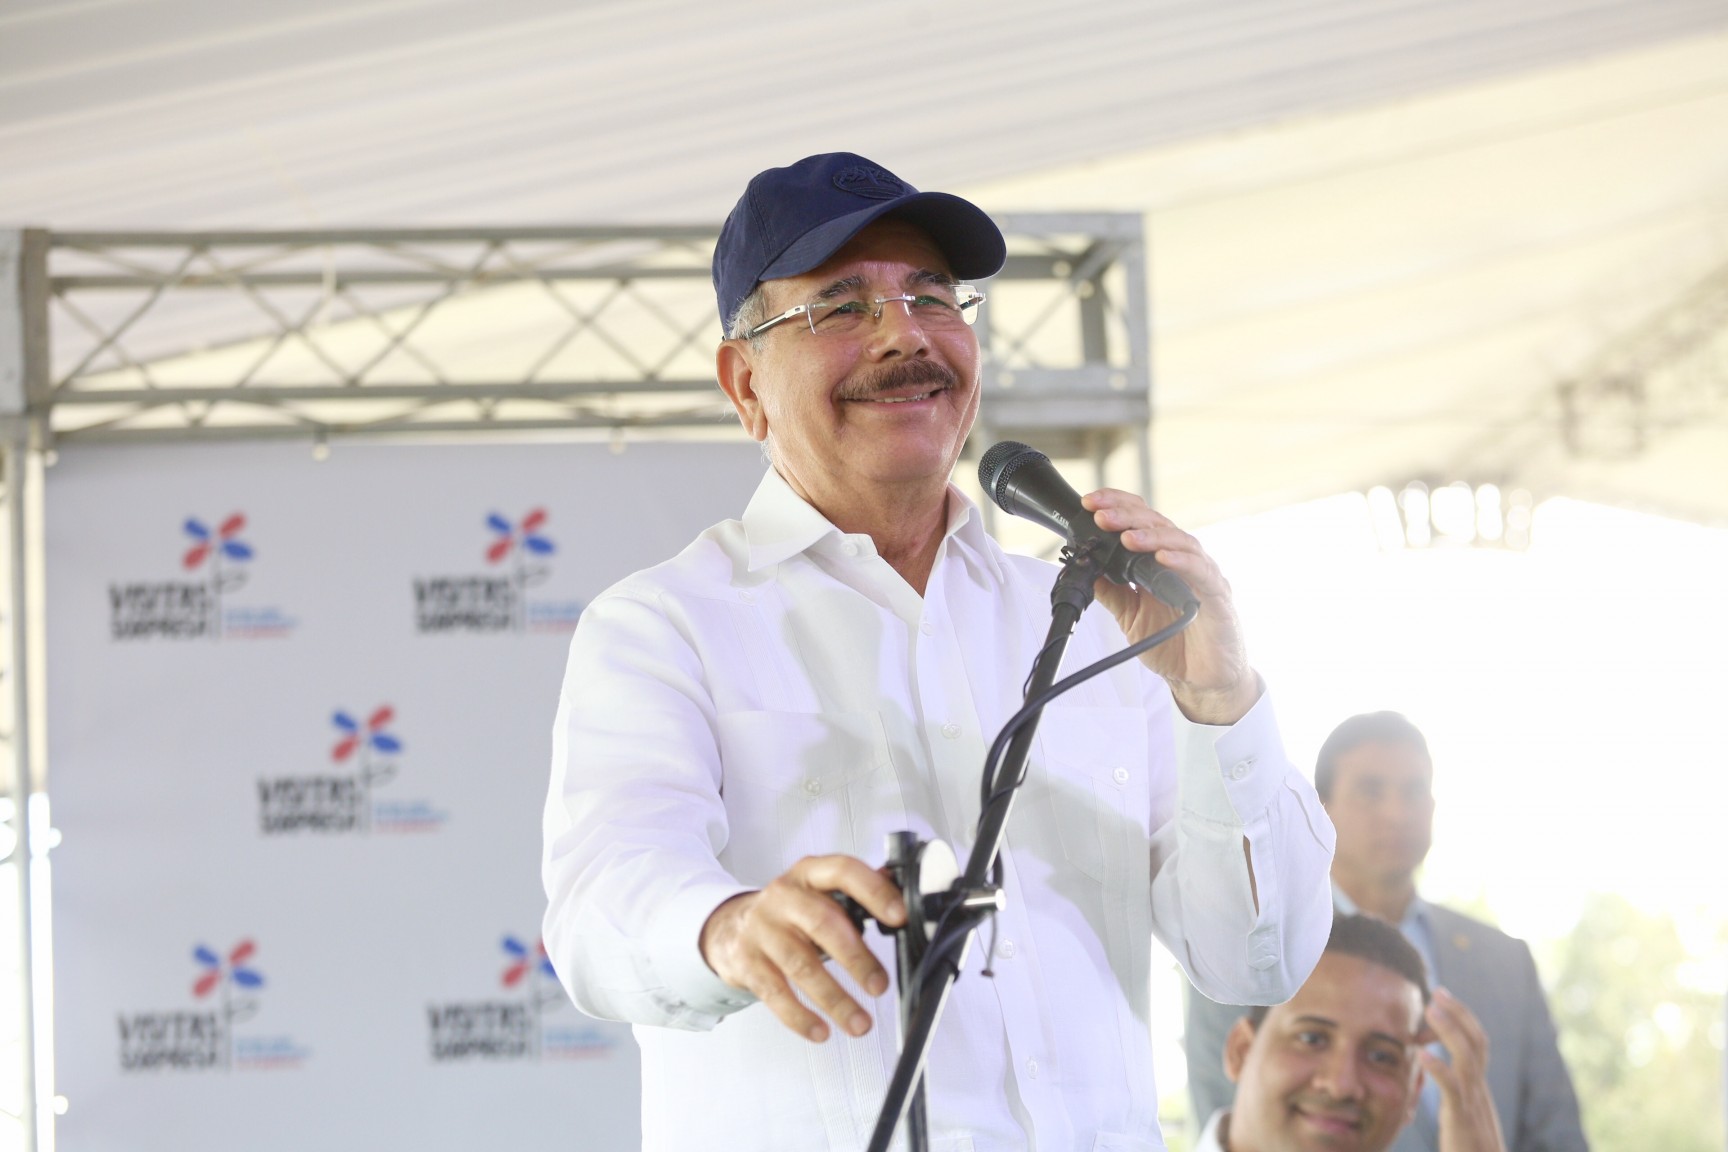 REPÚBLICA DOMINICANA: Danilo Medina: No somos el paisito que conocimos en el pasado. Somos la economía de más prestigio de América Latina y el Caribe